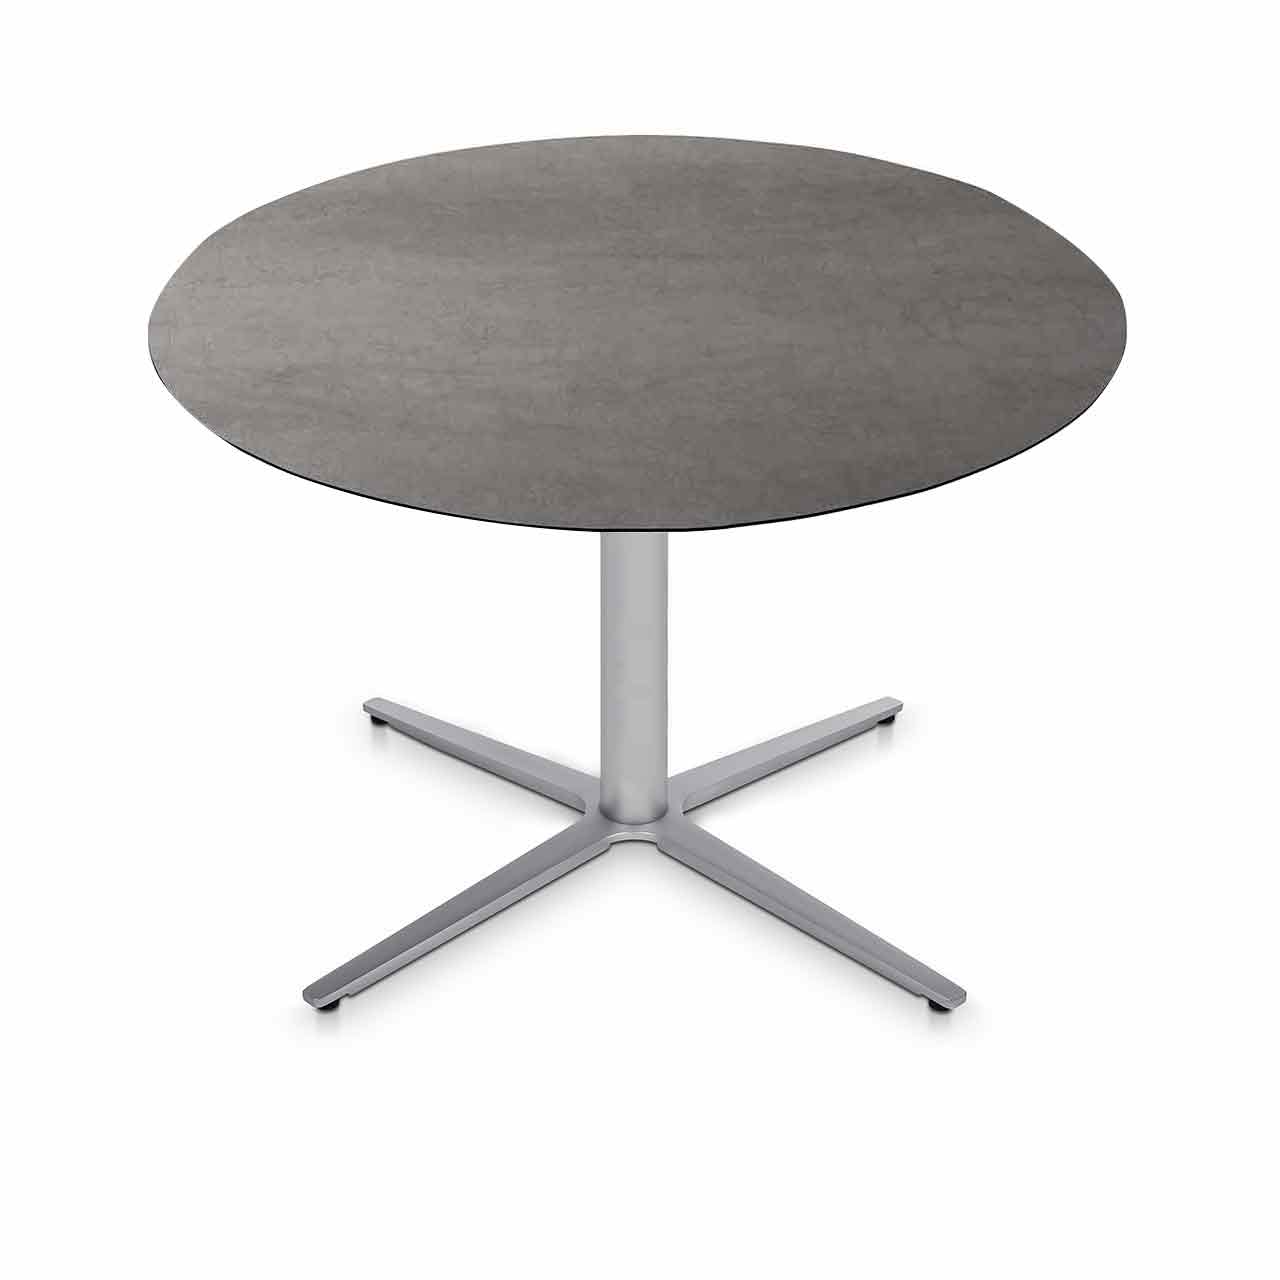 Ronald Schmitt – Fixus P 590 | Tischplatte Keramik Zement grau, Sockel Stermfuß Edelstahl